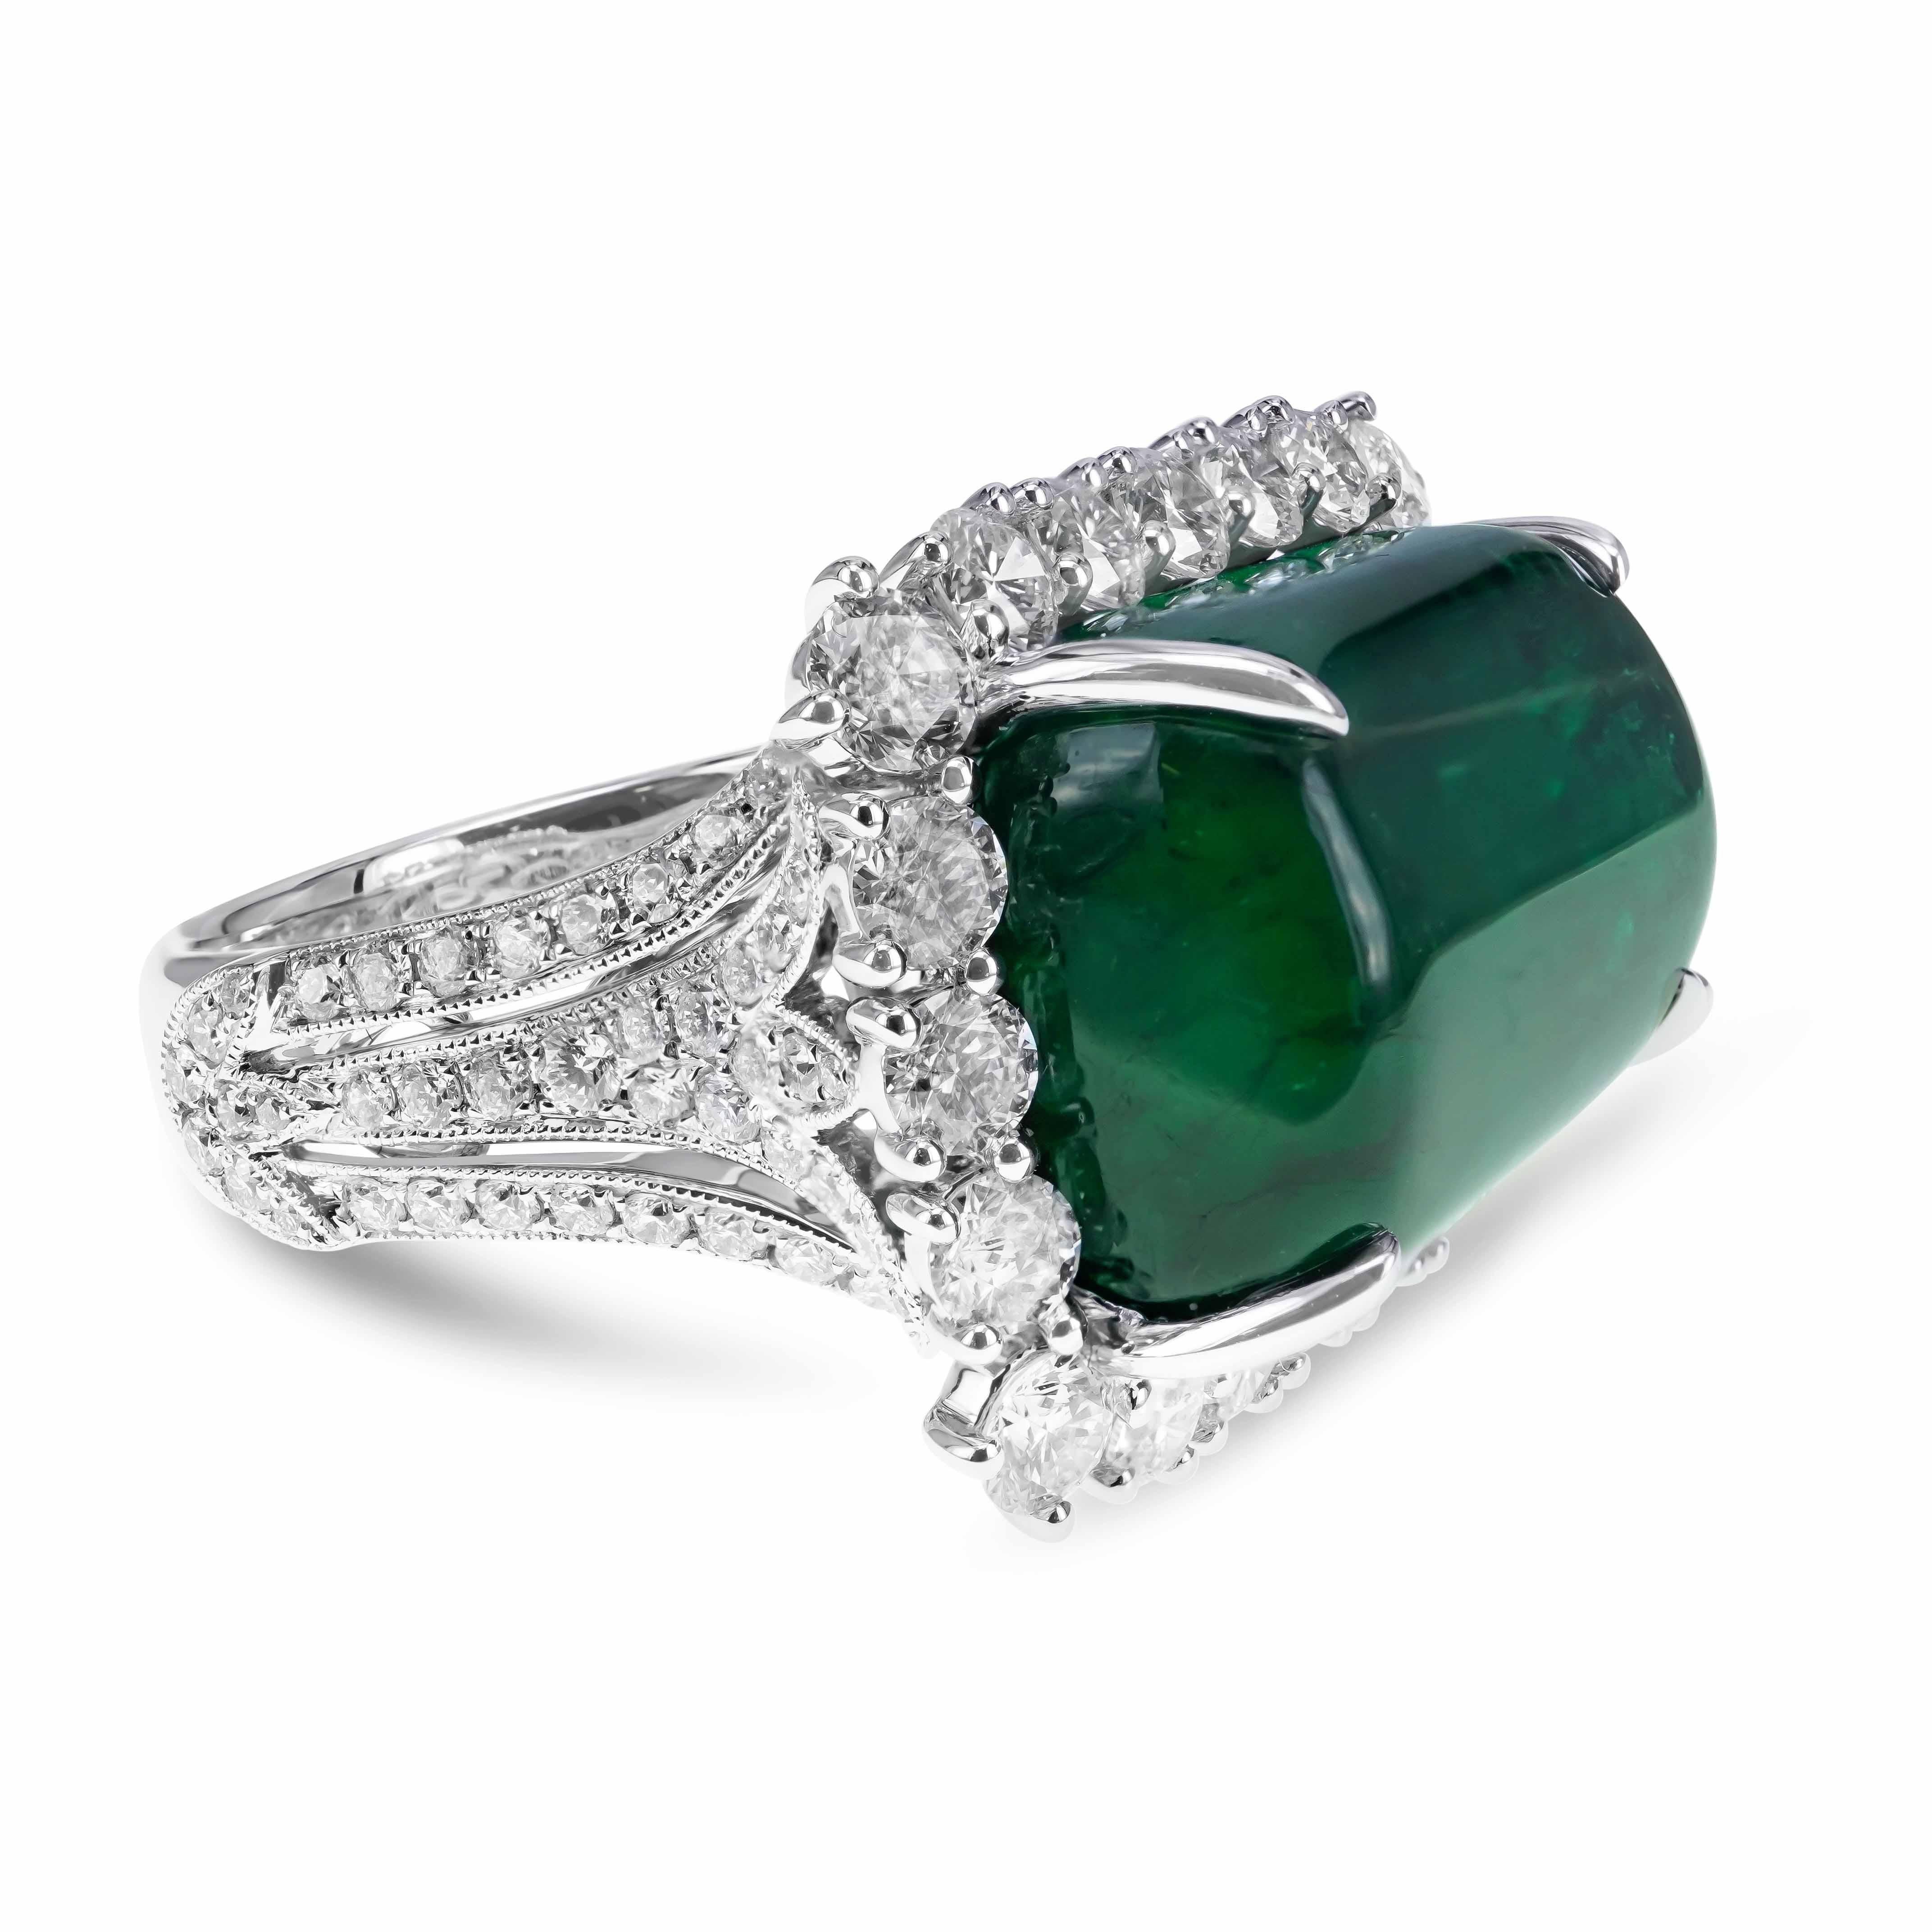 21,40 Karat lebhaft grüner stummerförmiger Smaragd 2,63 Karat Diamant-Cocktail RIng (Art nouveau) im Angebot